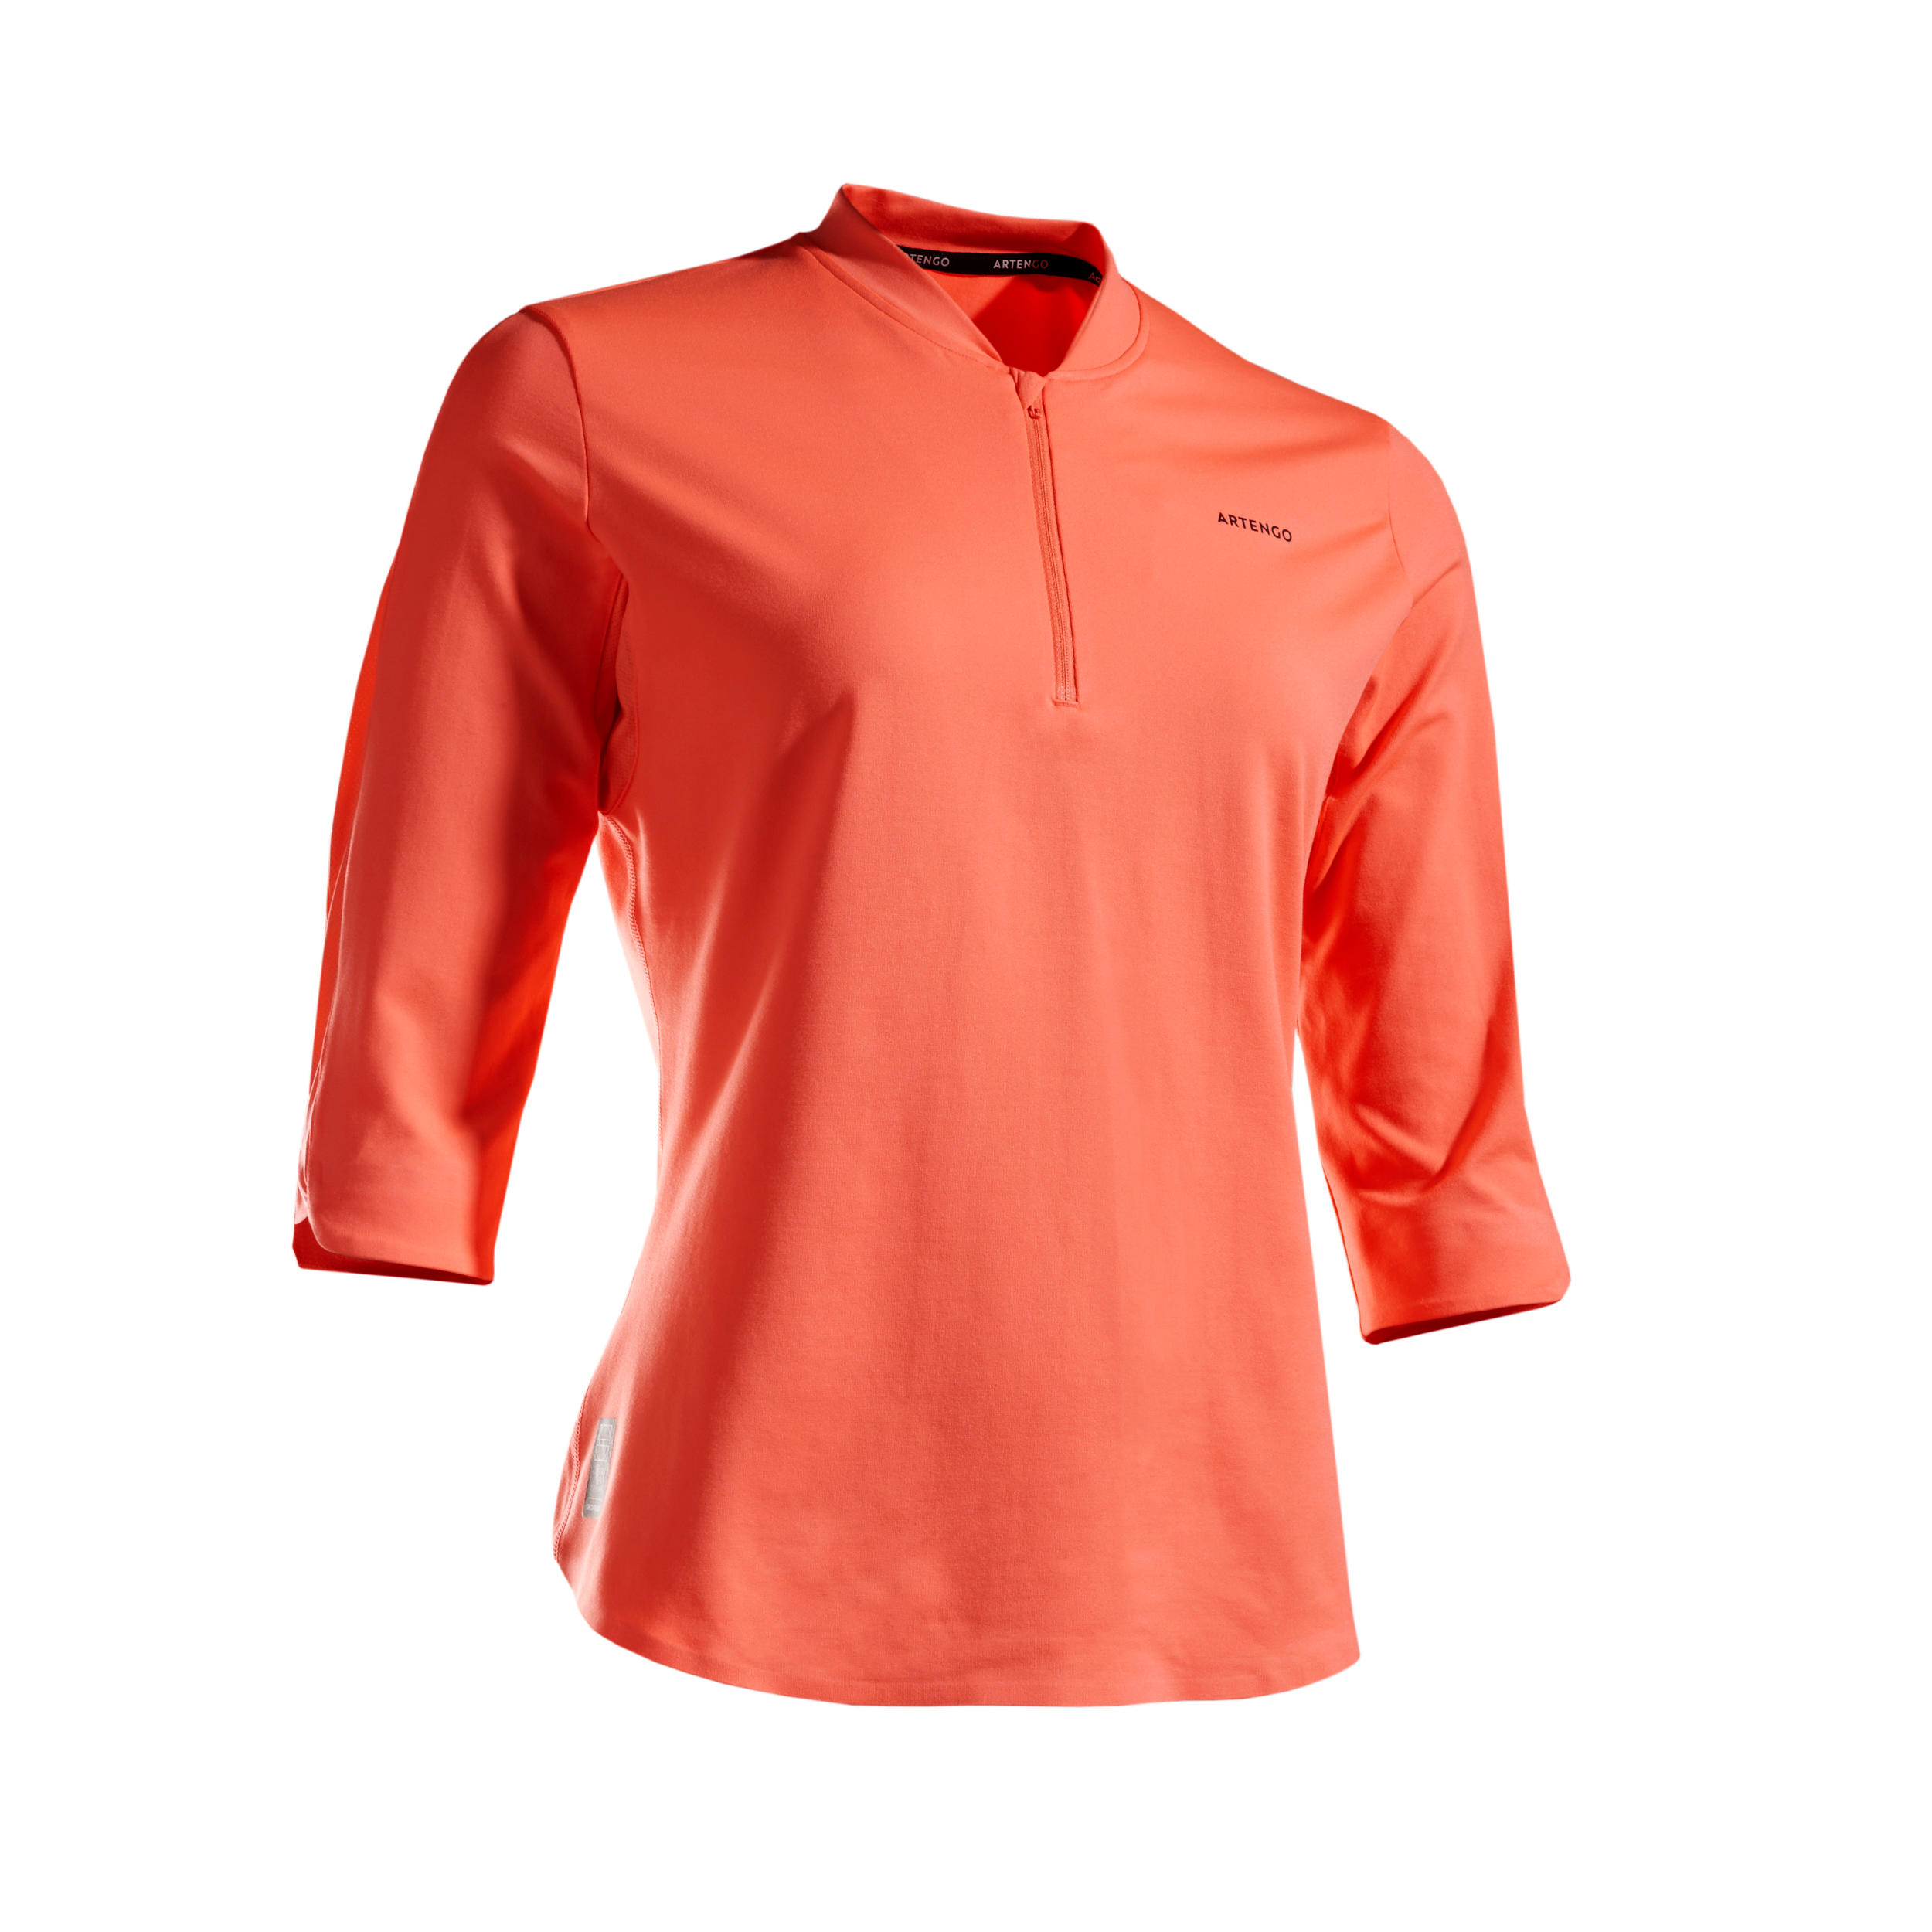 Women's 3/4 Sleeve Tennis T-Shirt Dry 900 - Coral 1/7